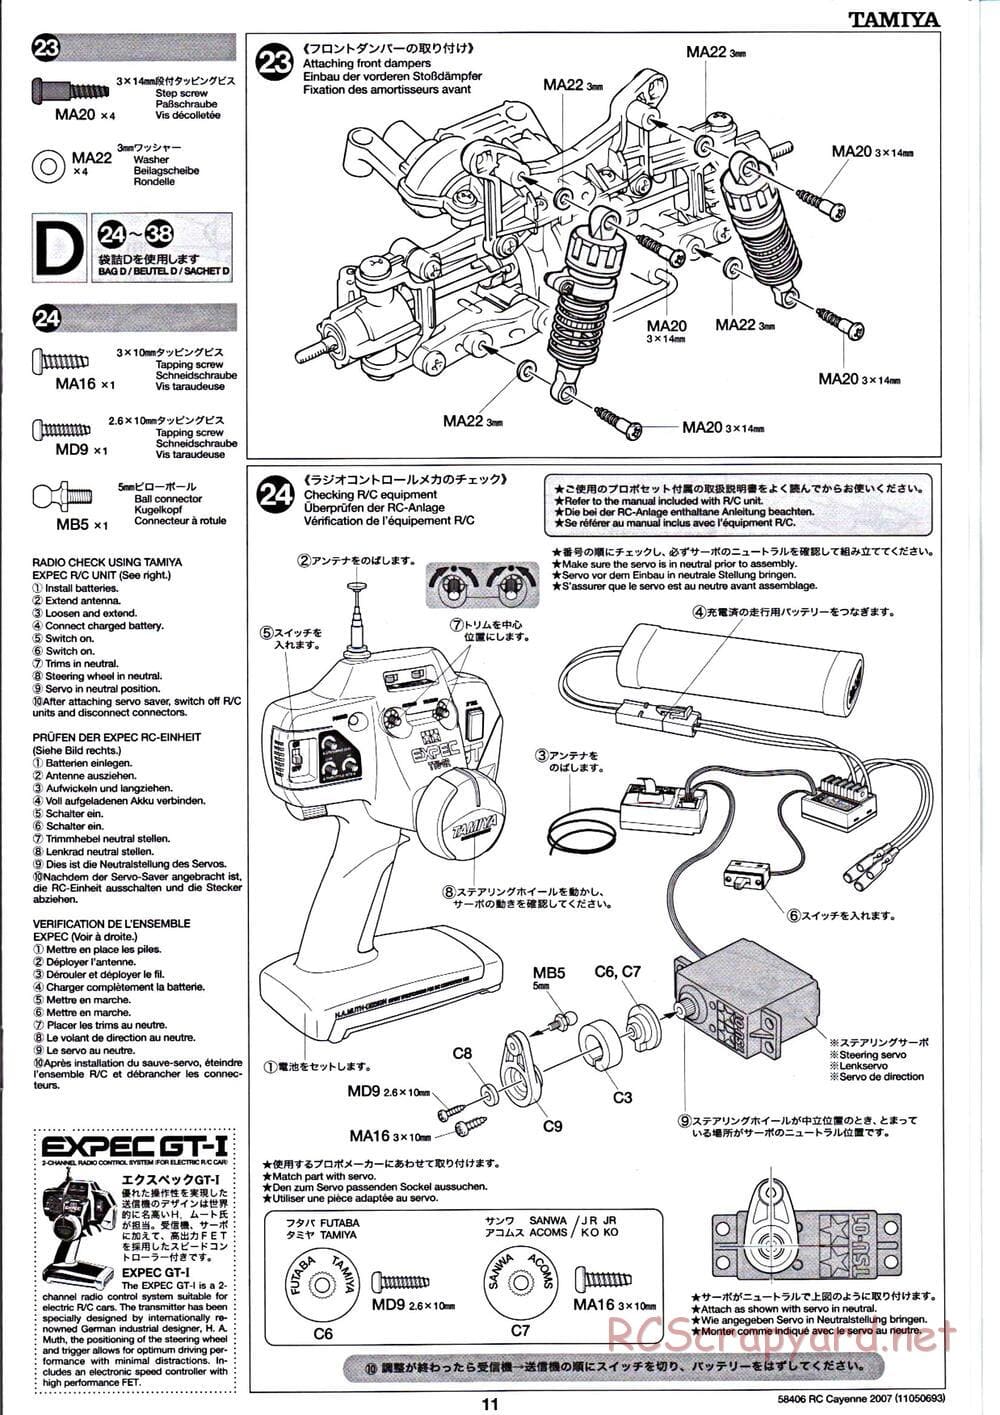 Tamiya - Cayenne S Transsyberia 2007 Chassis - Manual - Page 11